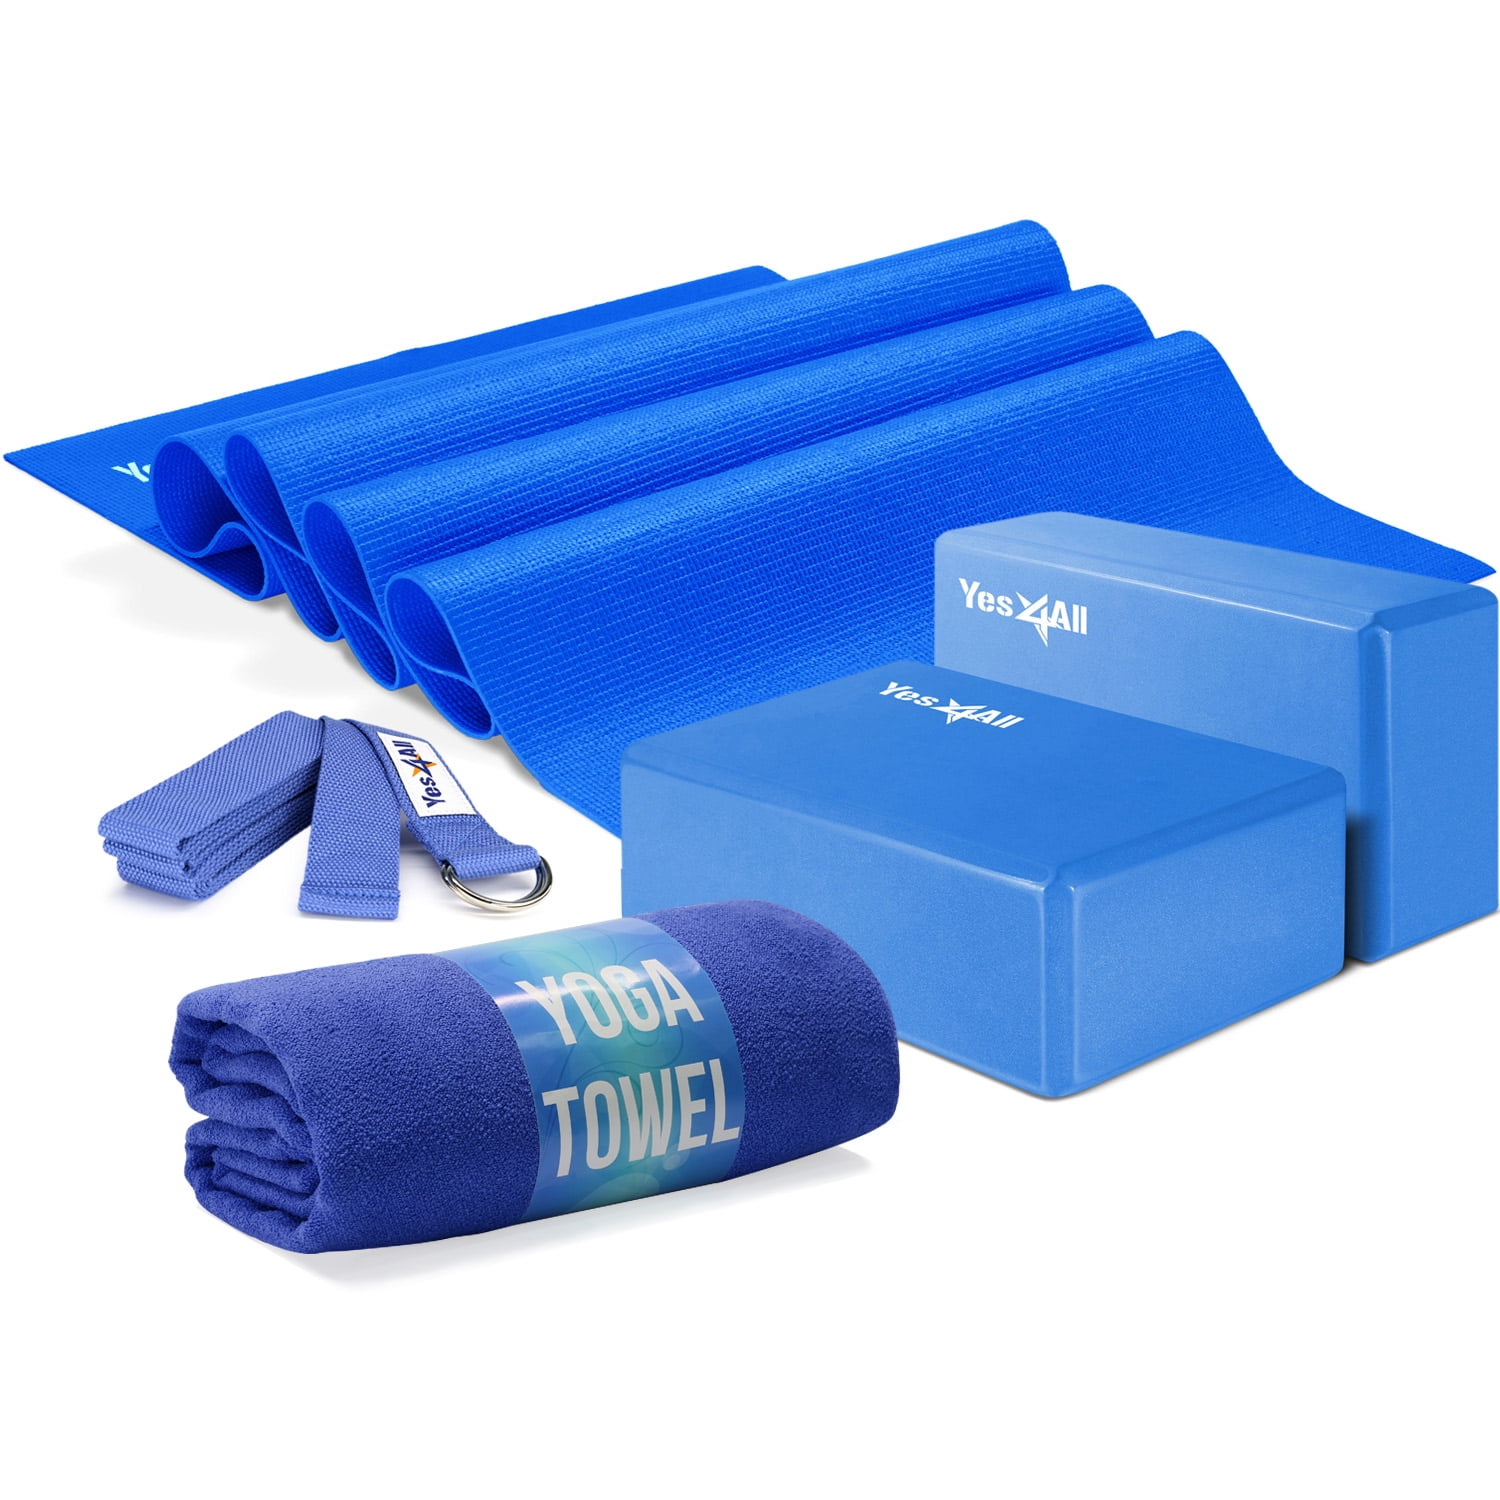 Yes4All Yoga Starter Kit, Includes PVC Exercise Yoga Mat, 2 Yoga